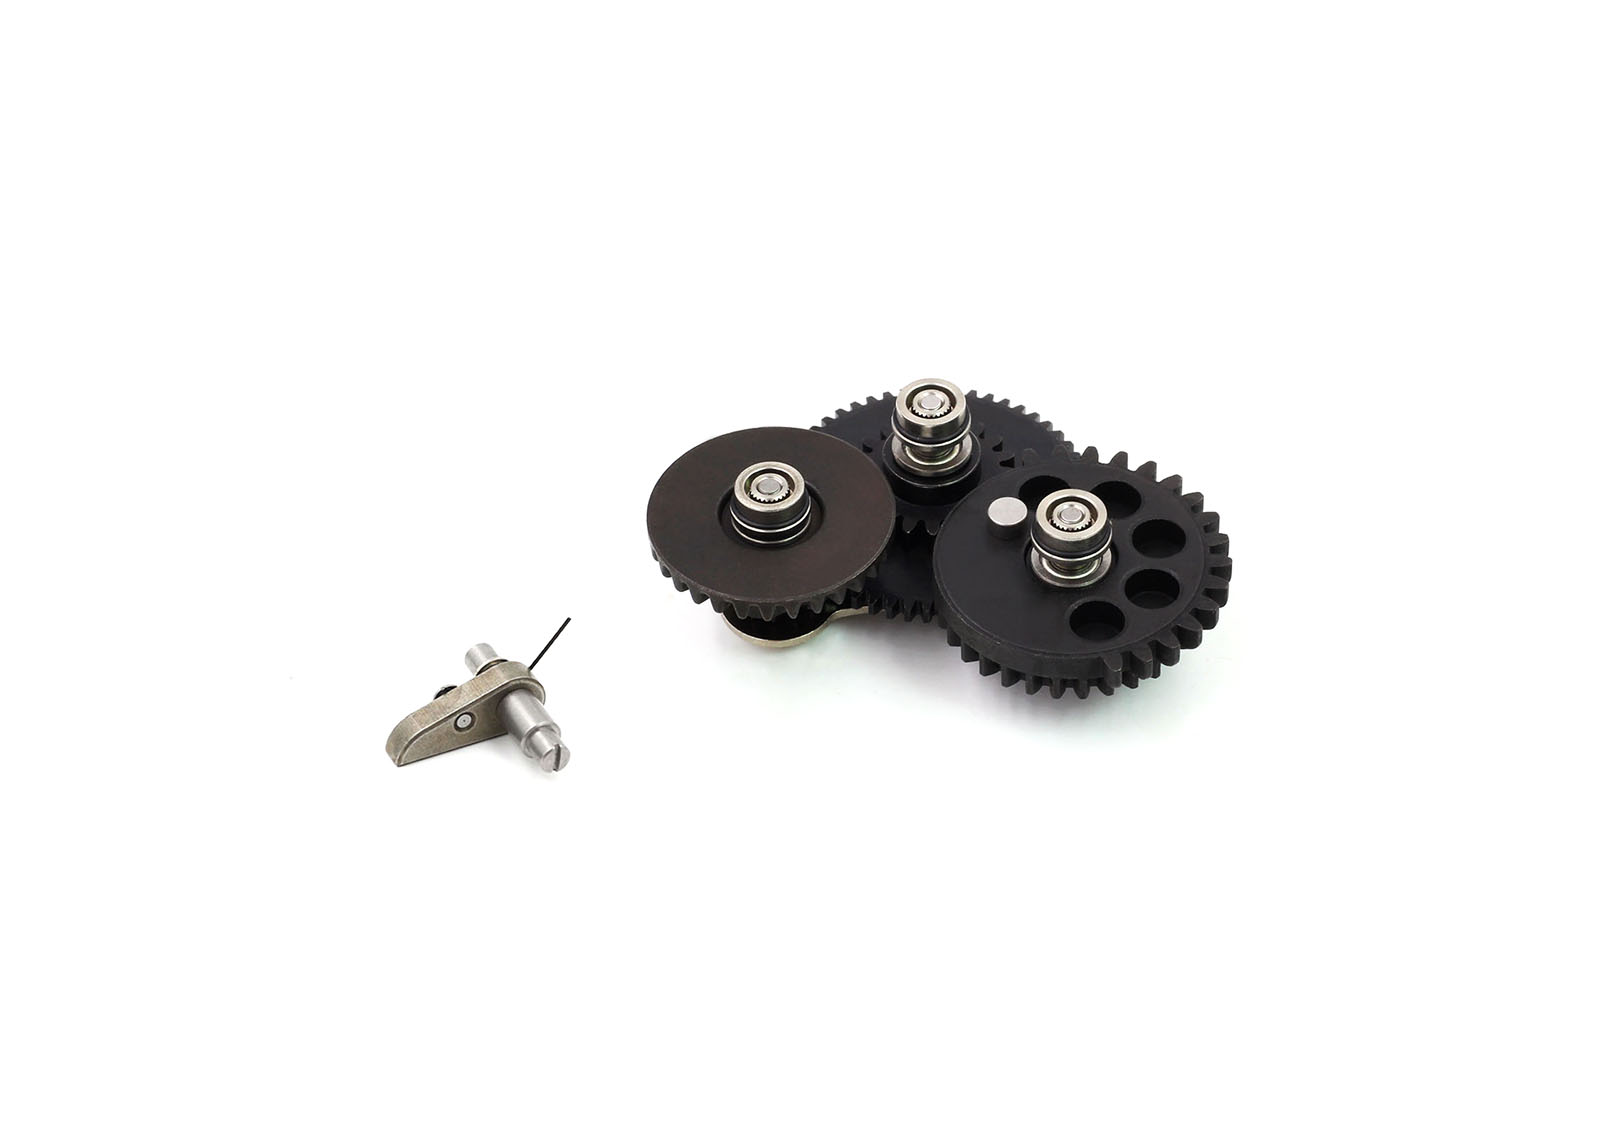 Modular Gear Set - SMOOTH 7mm Ver.2/Ver.3 (Torque 21.6:1) - Modify Airsoft parts